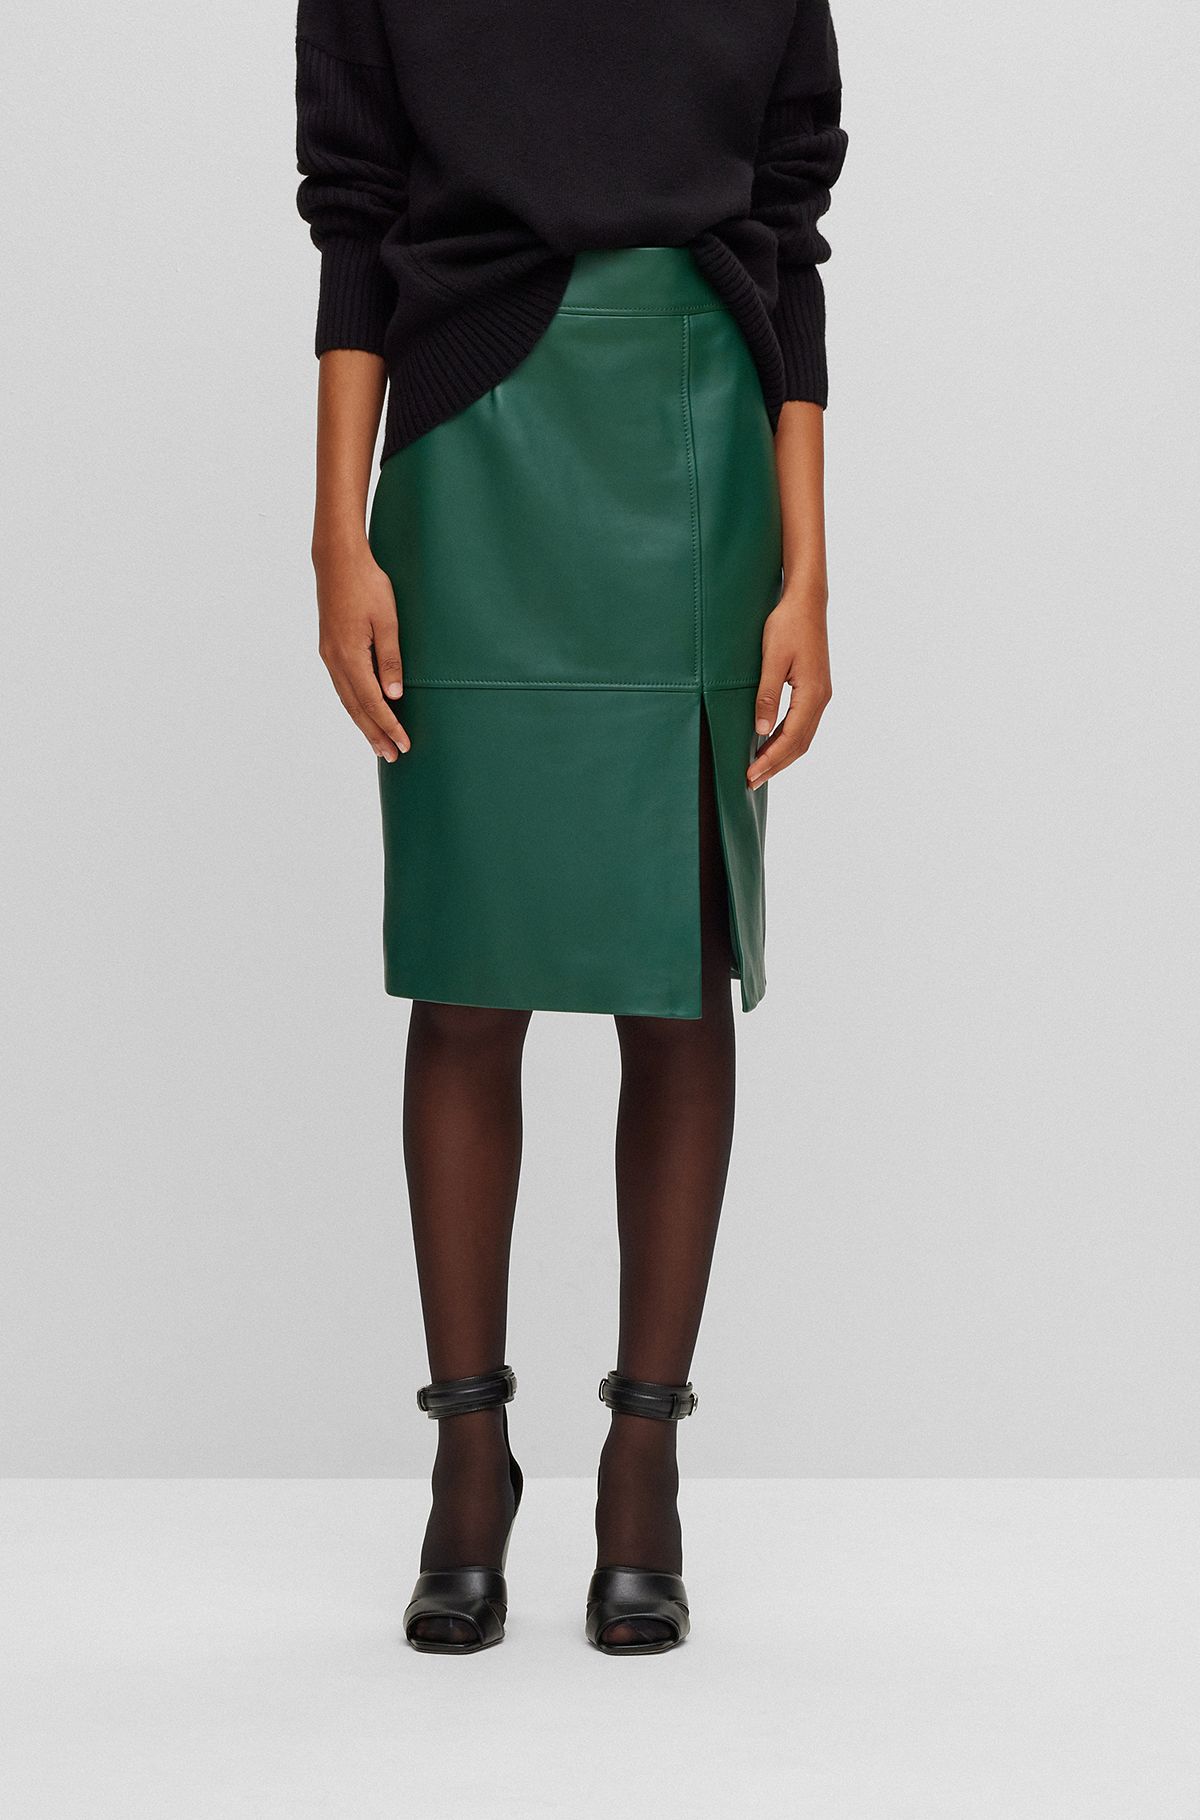 Slim-fit pencil skirt in leather, Dark Green